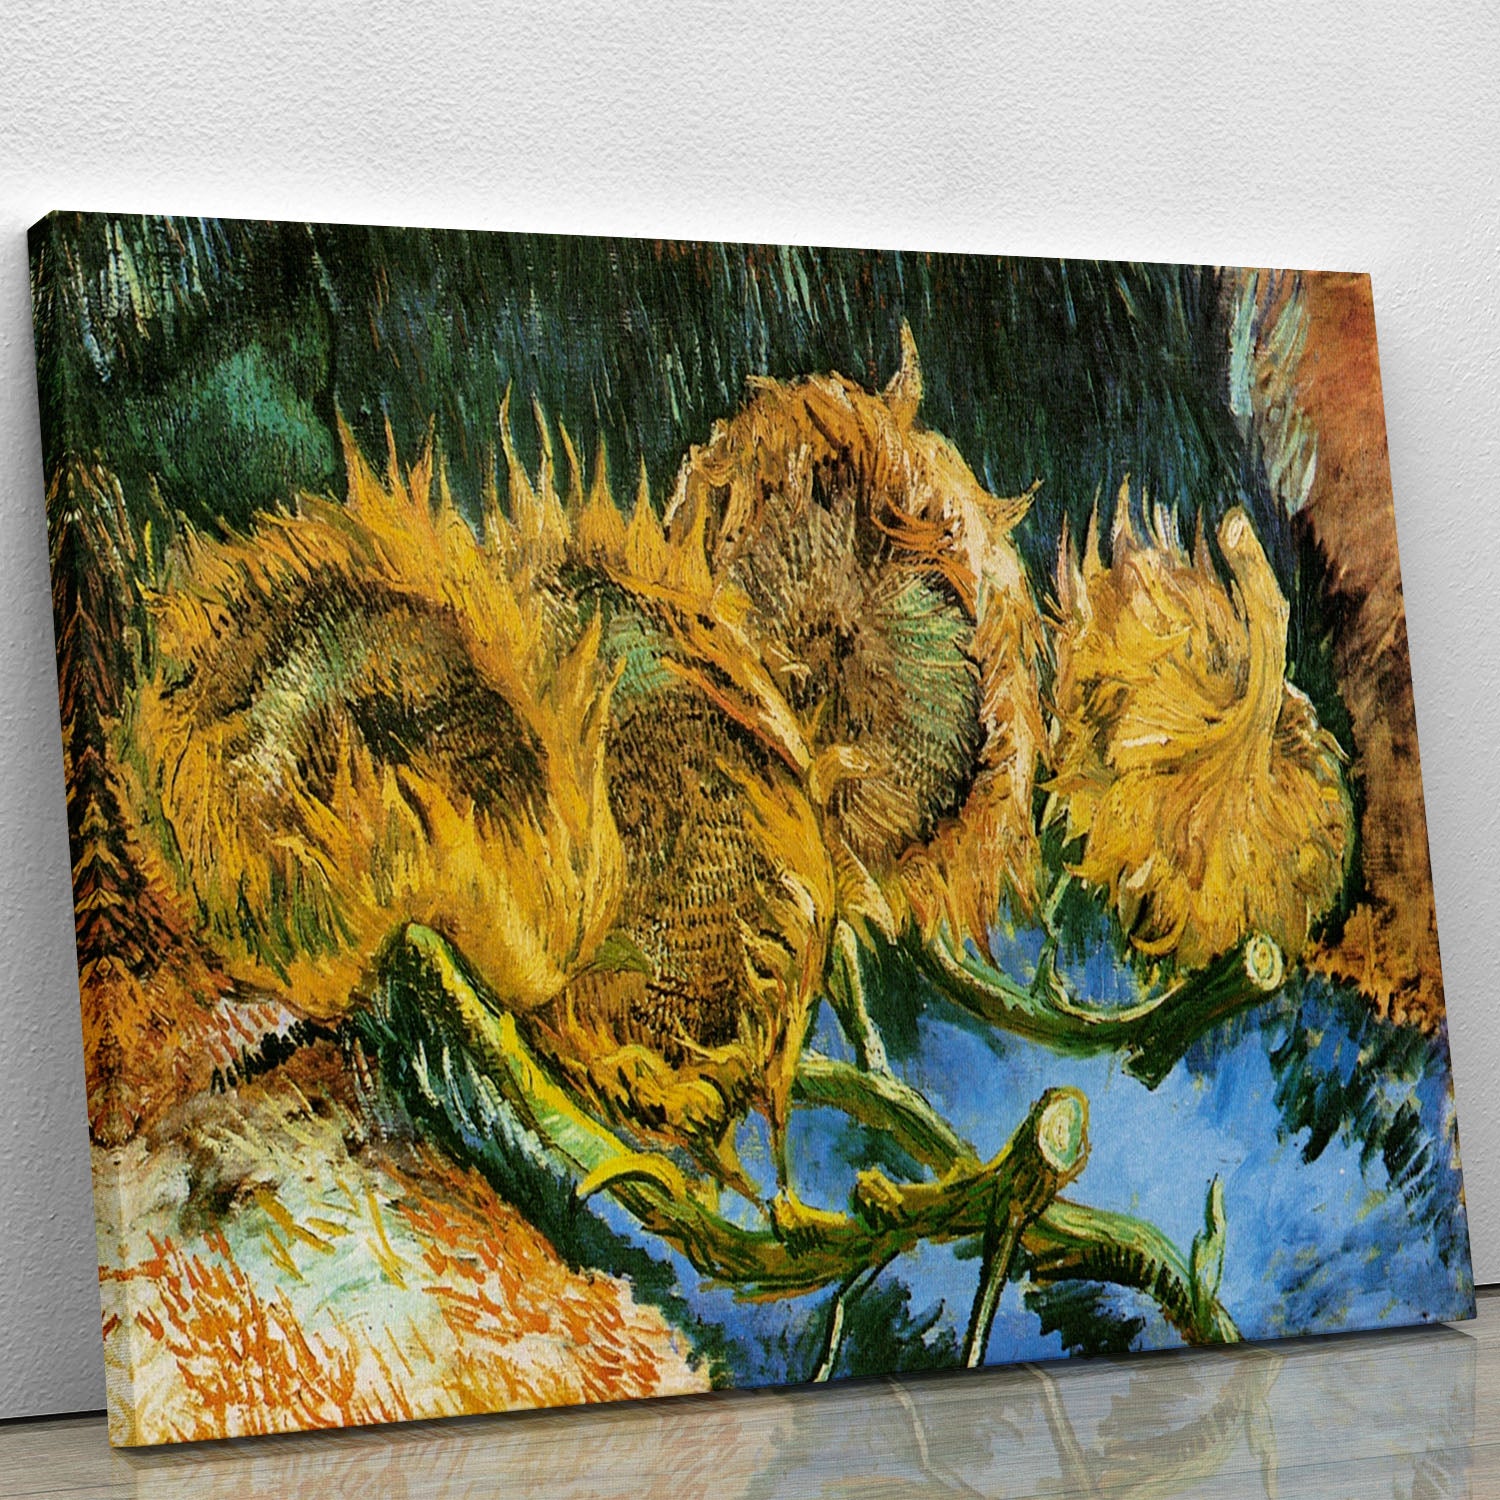 Four Cut Sunflowers by Van Gogh Canvas Print or Poster - Canvas Art Rocks - 1